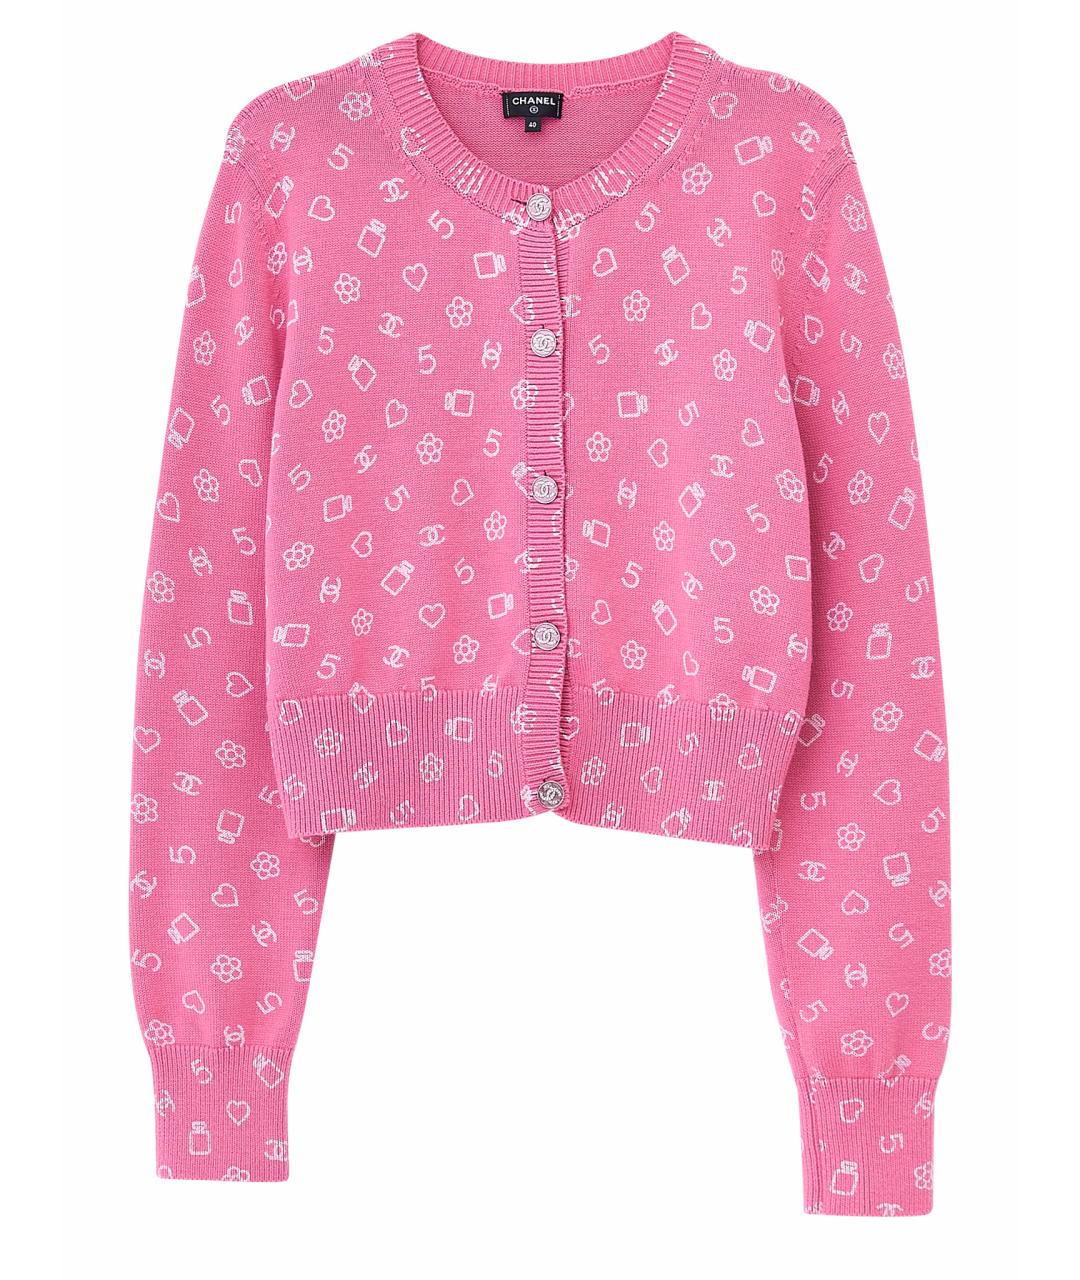 CHANEL PRE-OWNED Розовый джемпер / свитер, фото 1